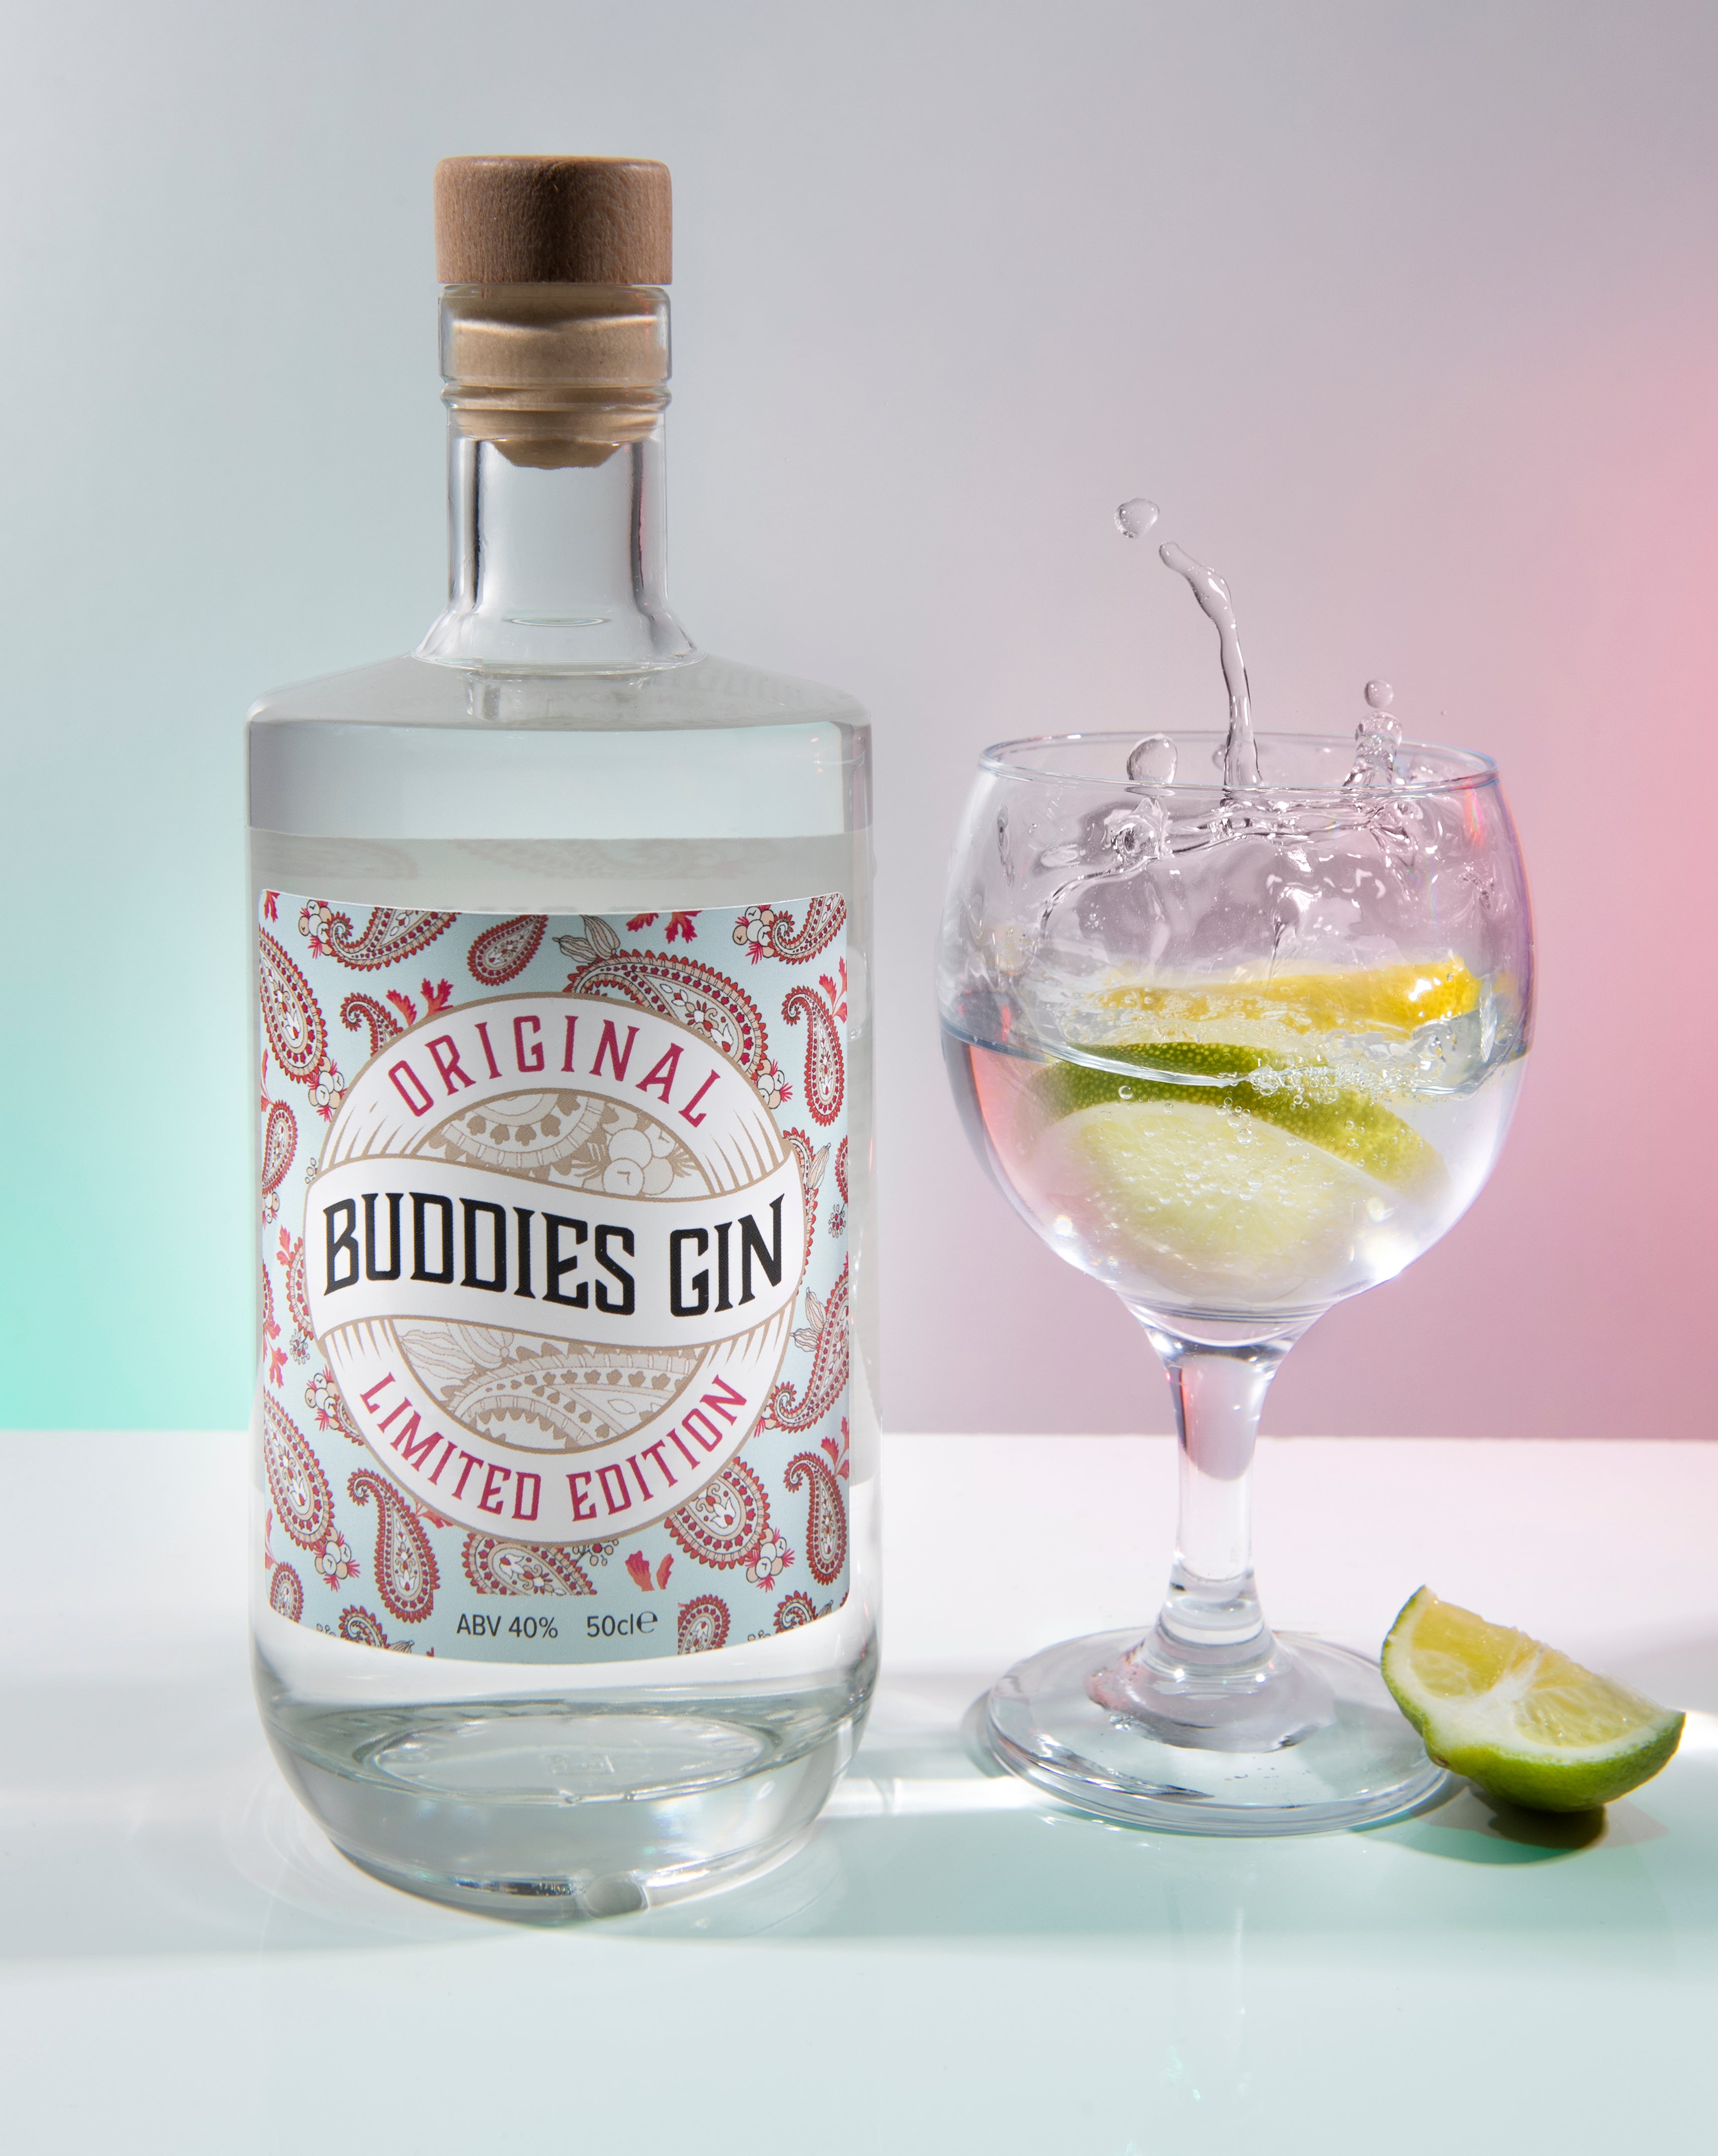 Buddies Gin: 50cl Premium Small Batch Craft Gin